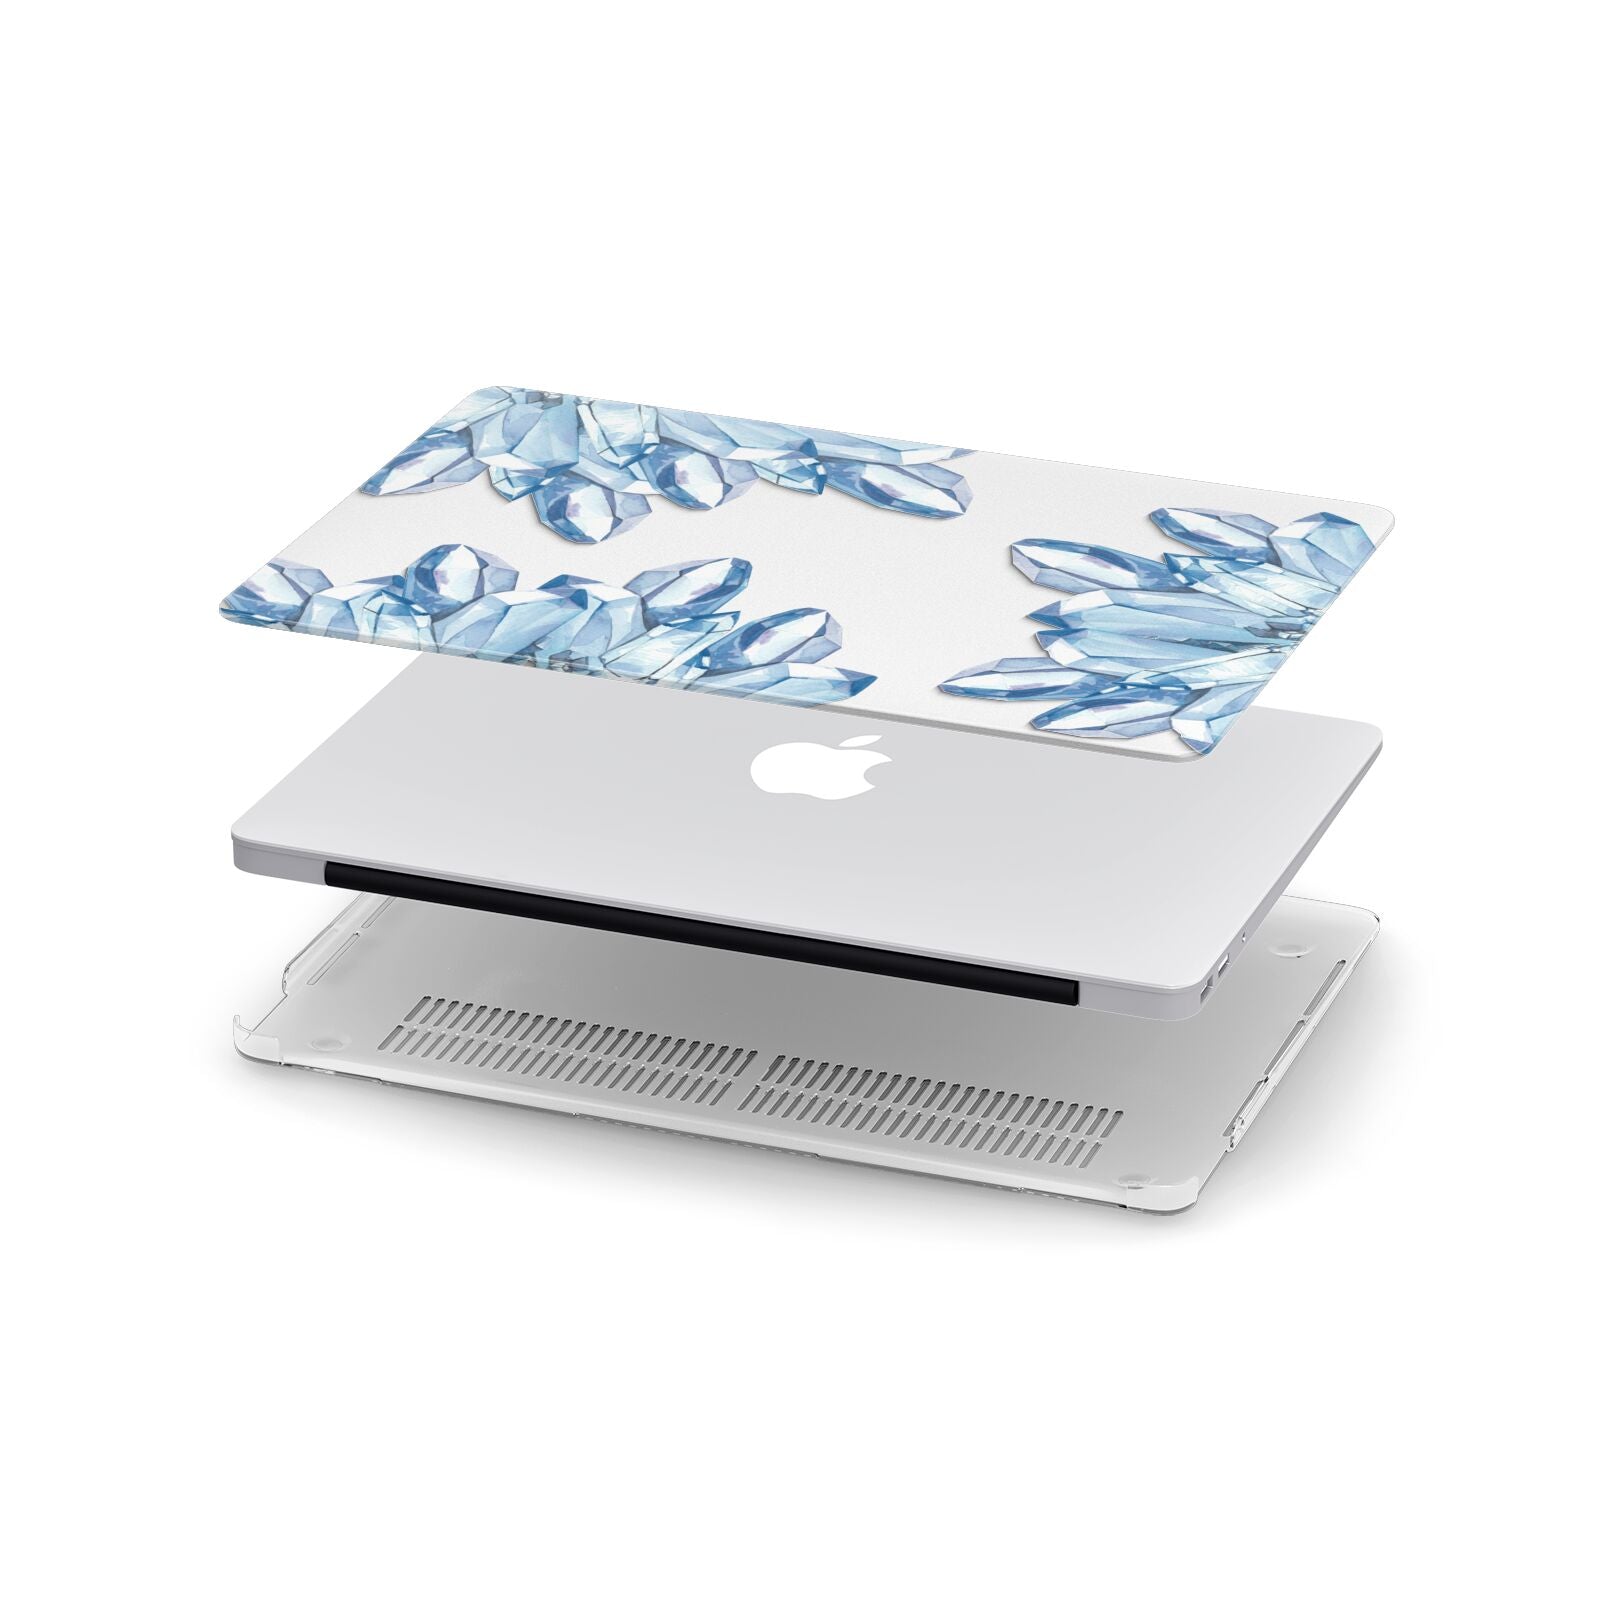 Blue Crystals Apple MacBook Case in Detail